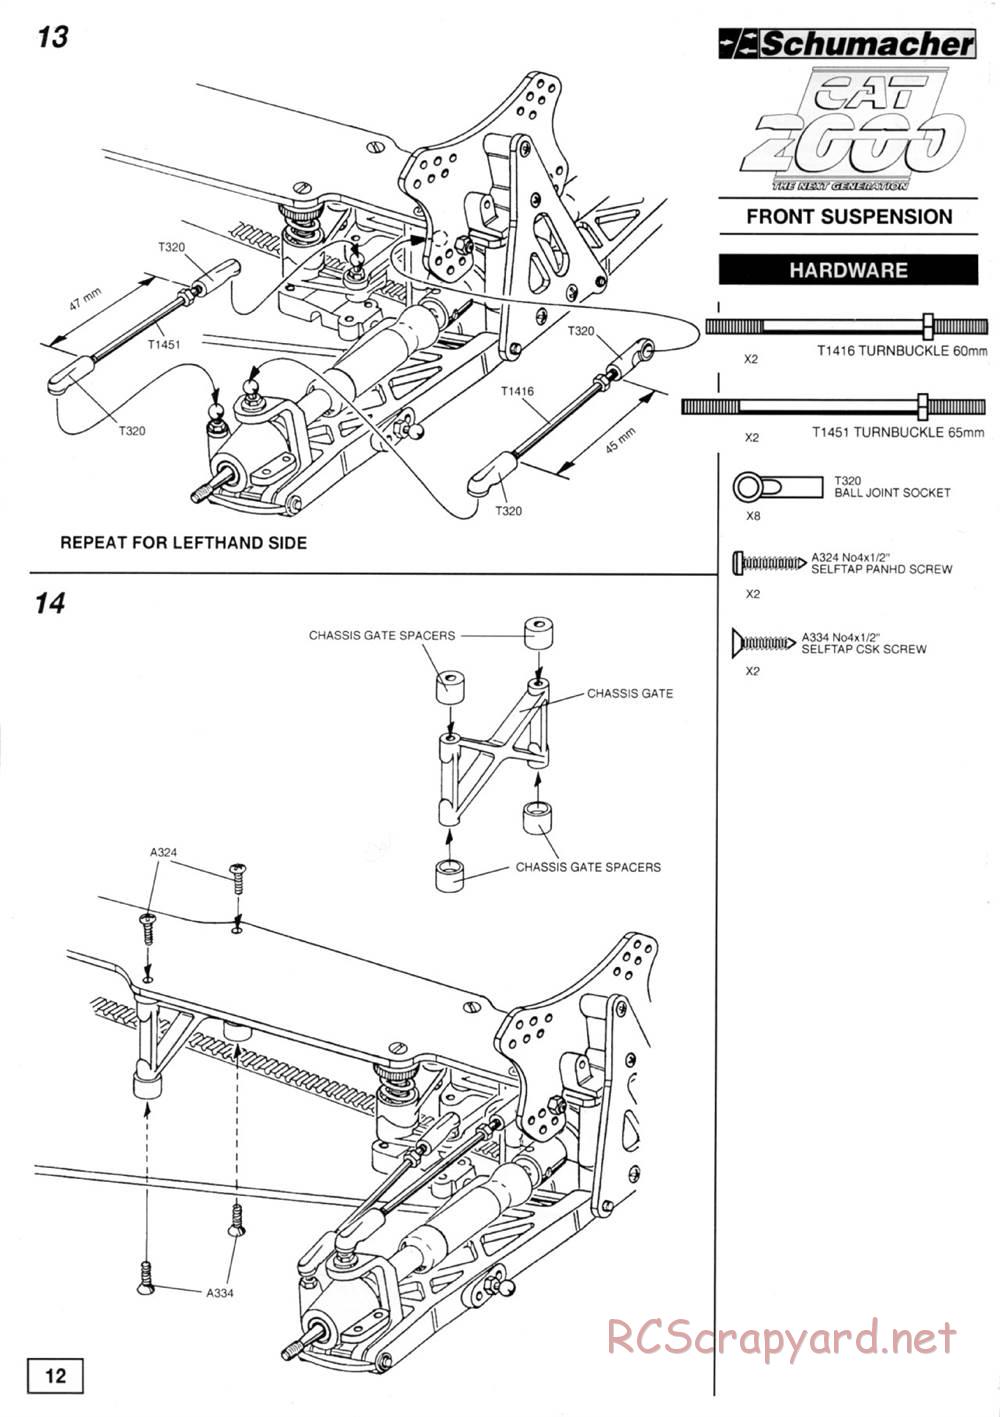 Schumacher - Cat 2000 - Manual - Page 14